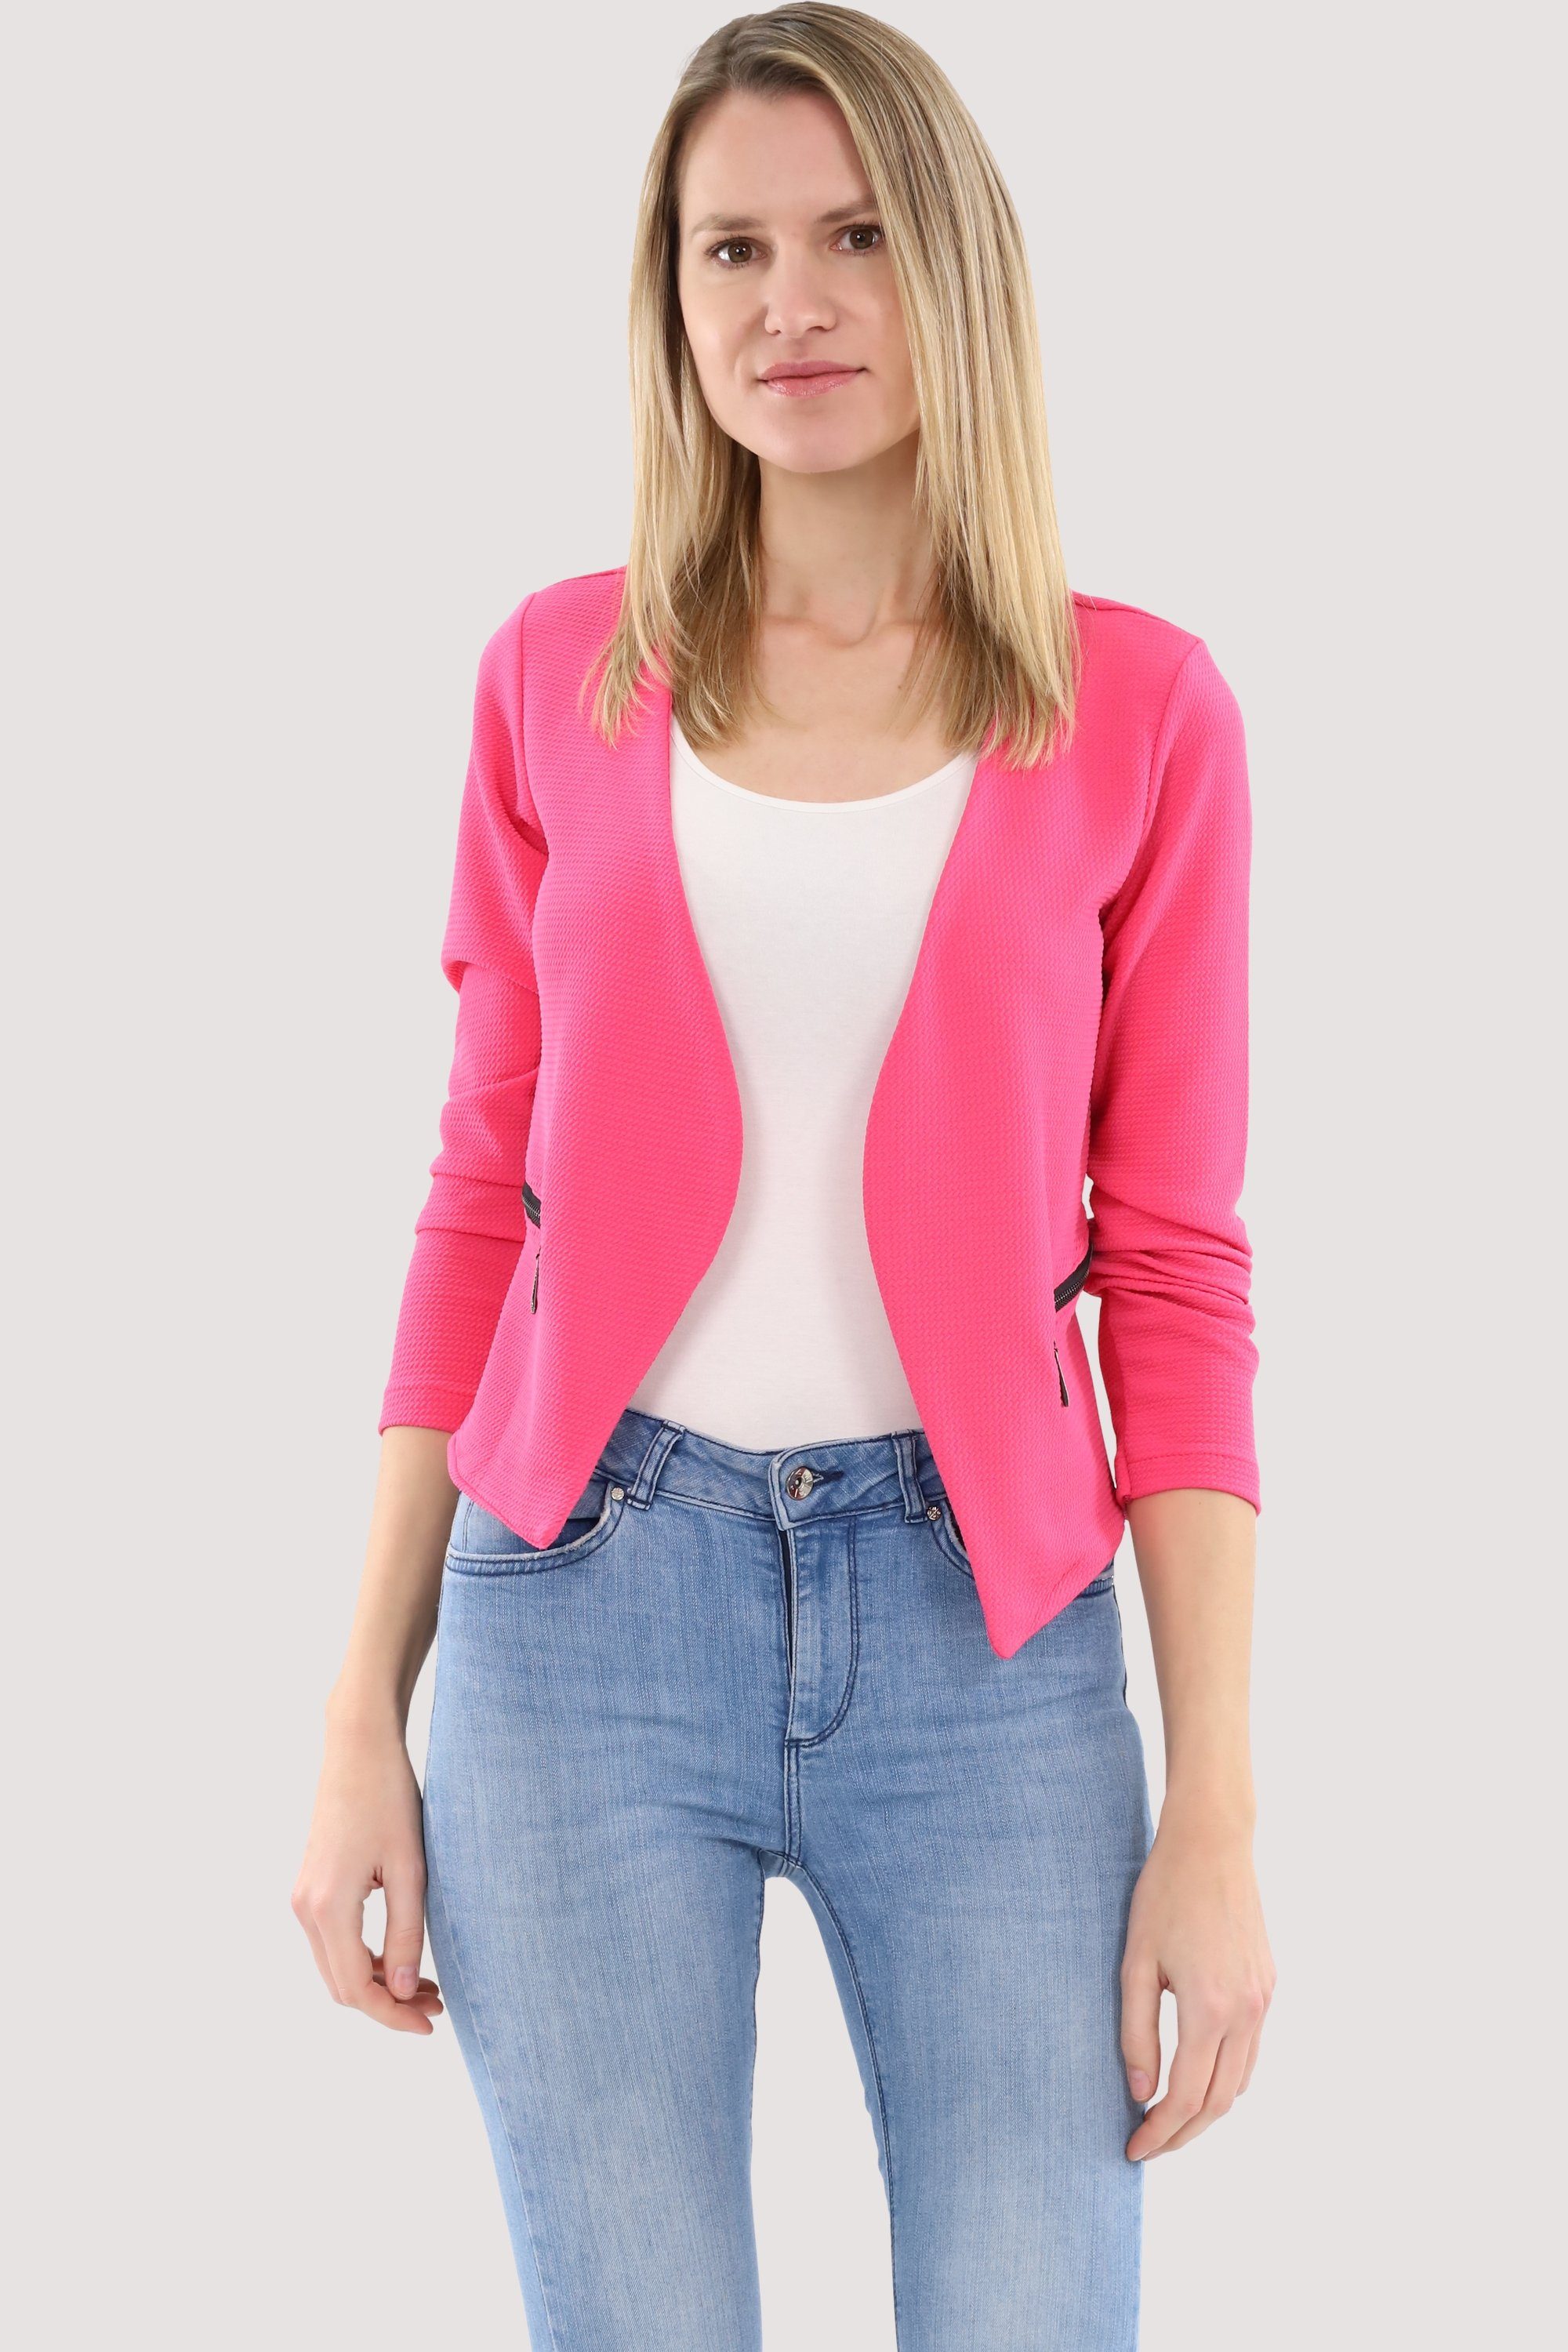 than malito im Jackenblazer fashion 6040 Basic-Look more pink Sweatblazer